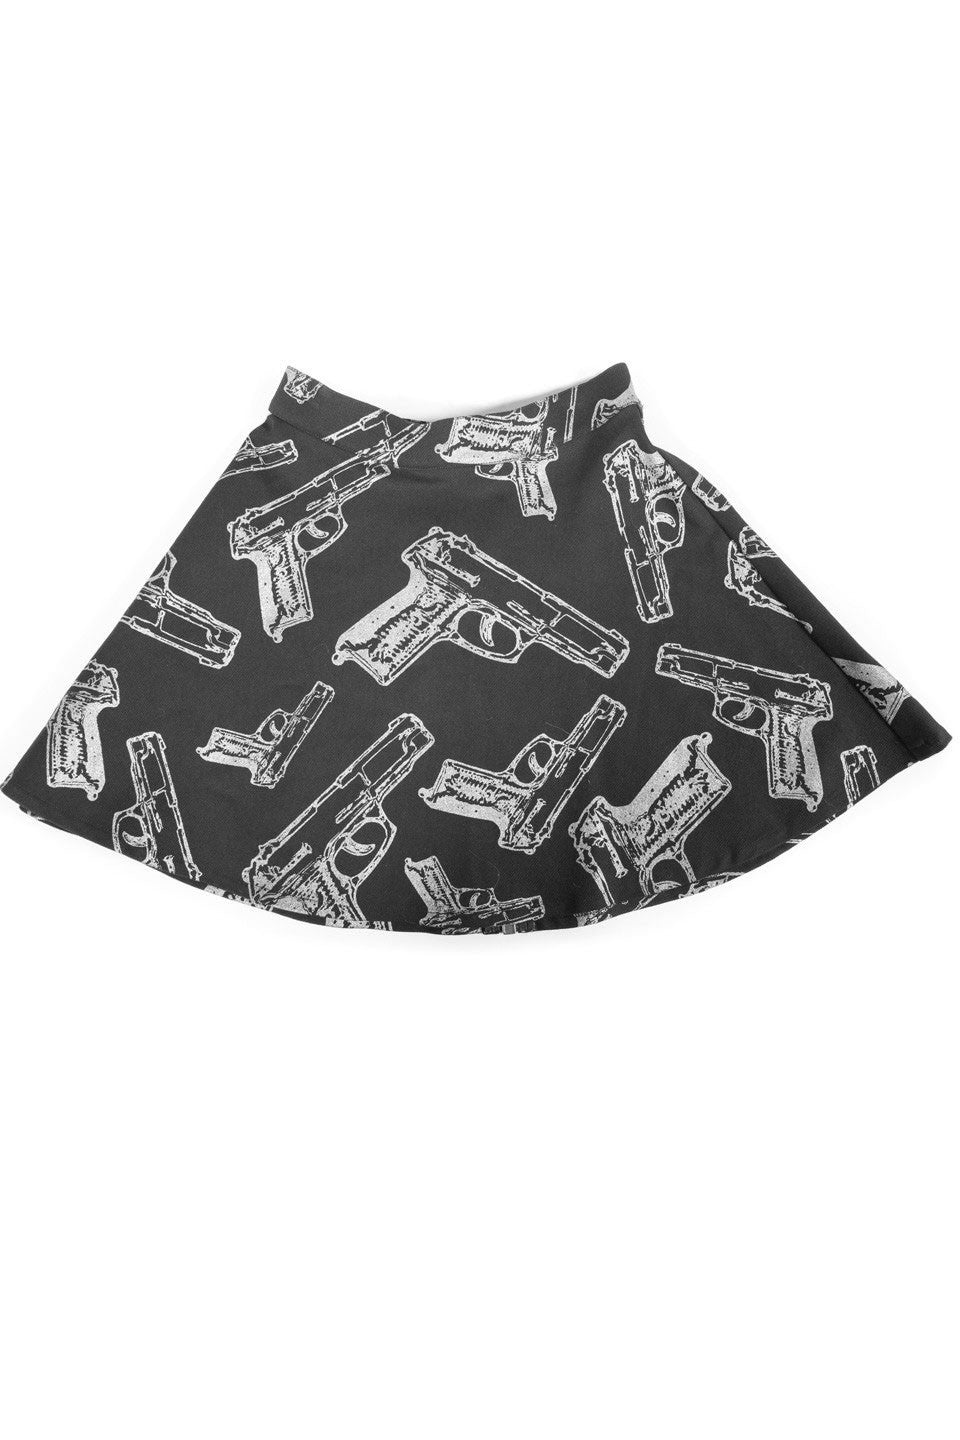 Vintage Guns Suck Skirt-Skirts-Lip Service